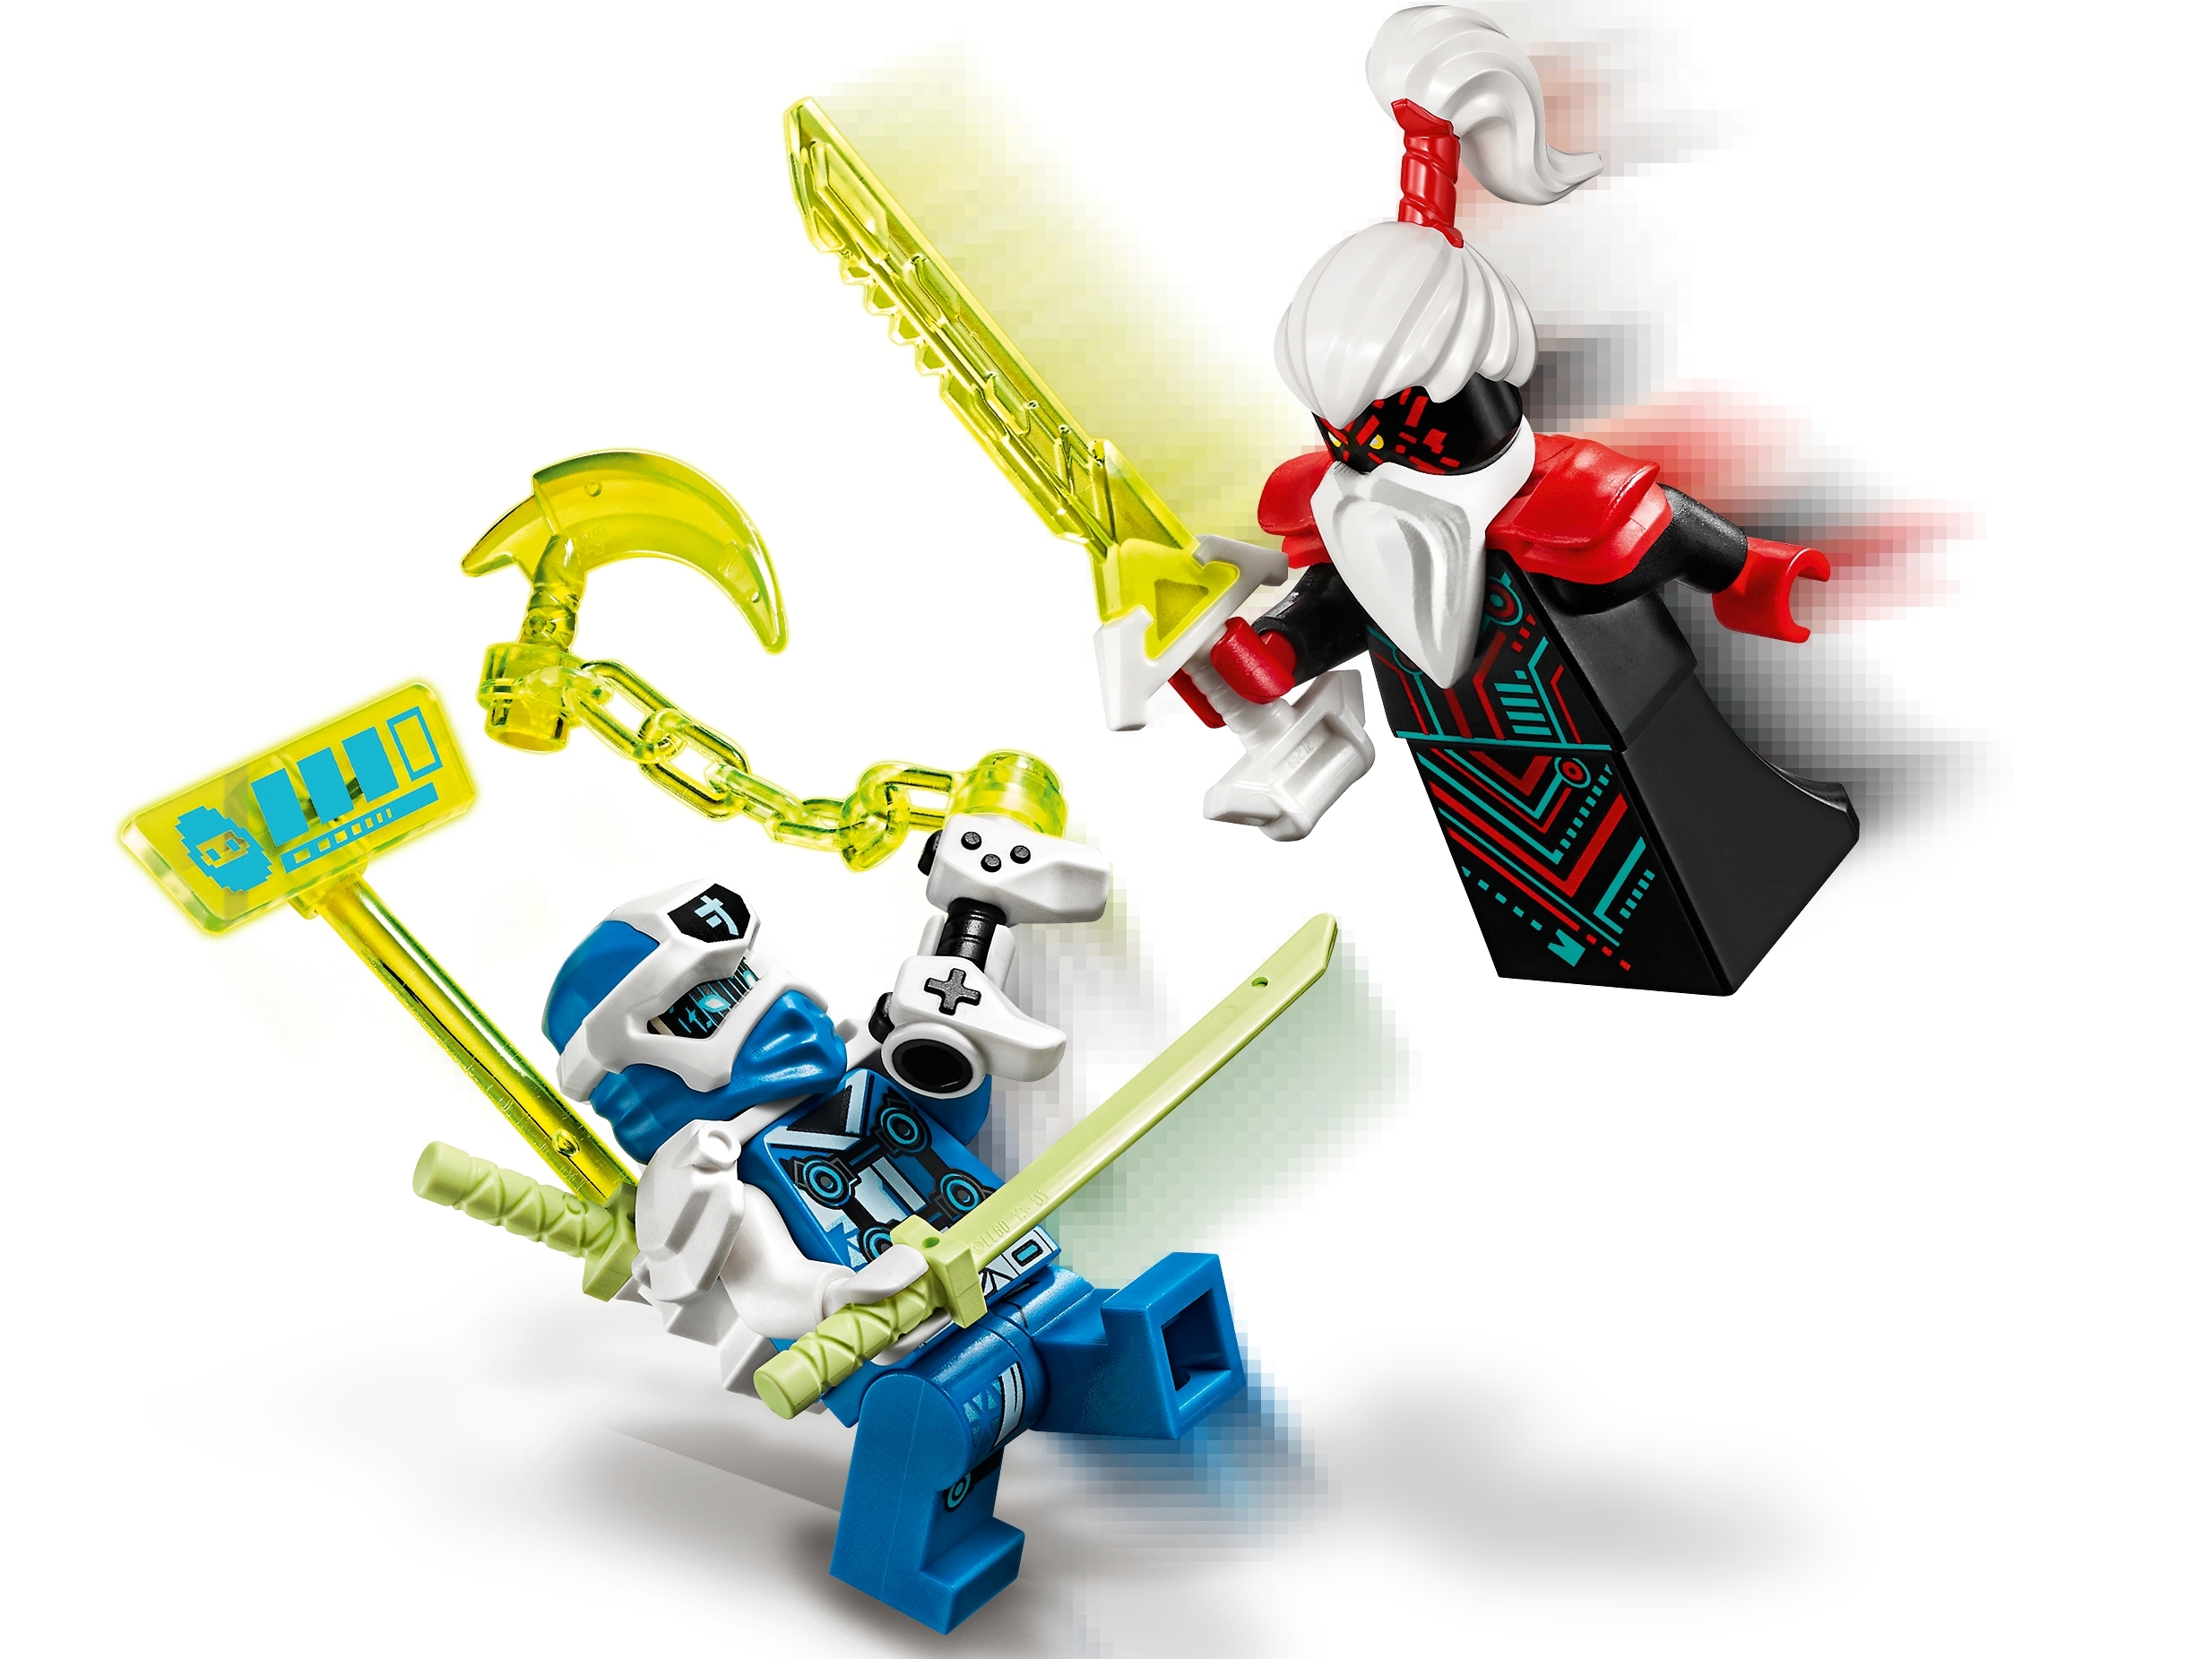 71711-2 Lego Ninjago Jay Cyber Dragon Set Completo Manual 